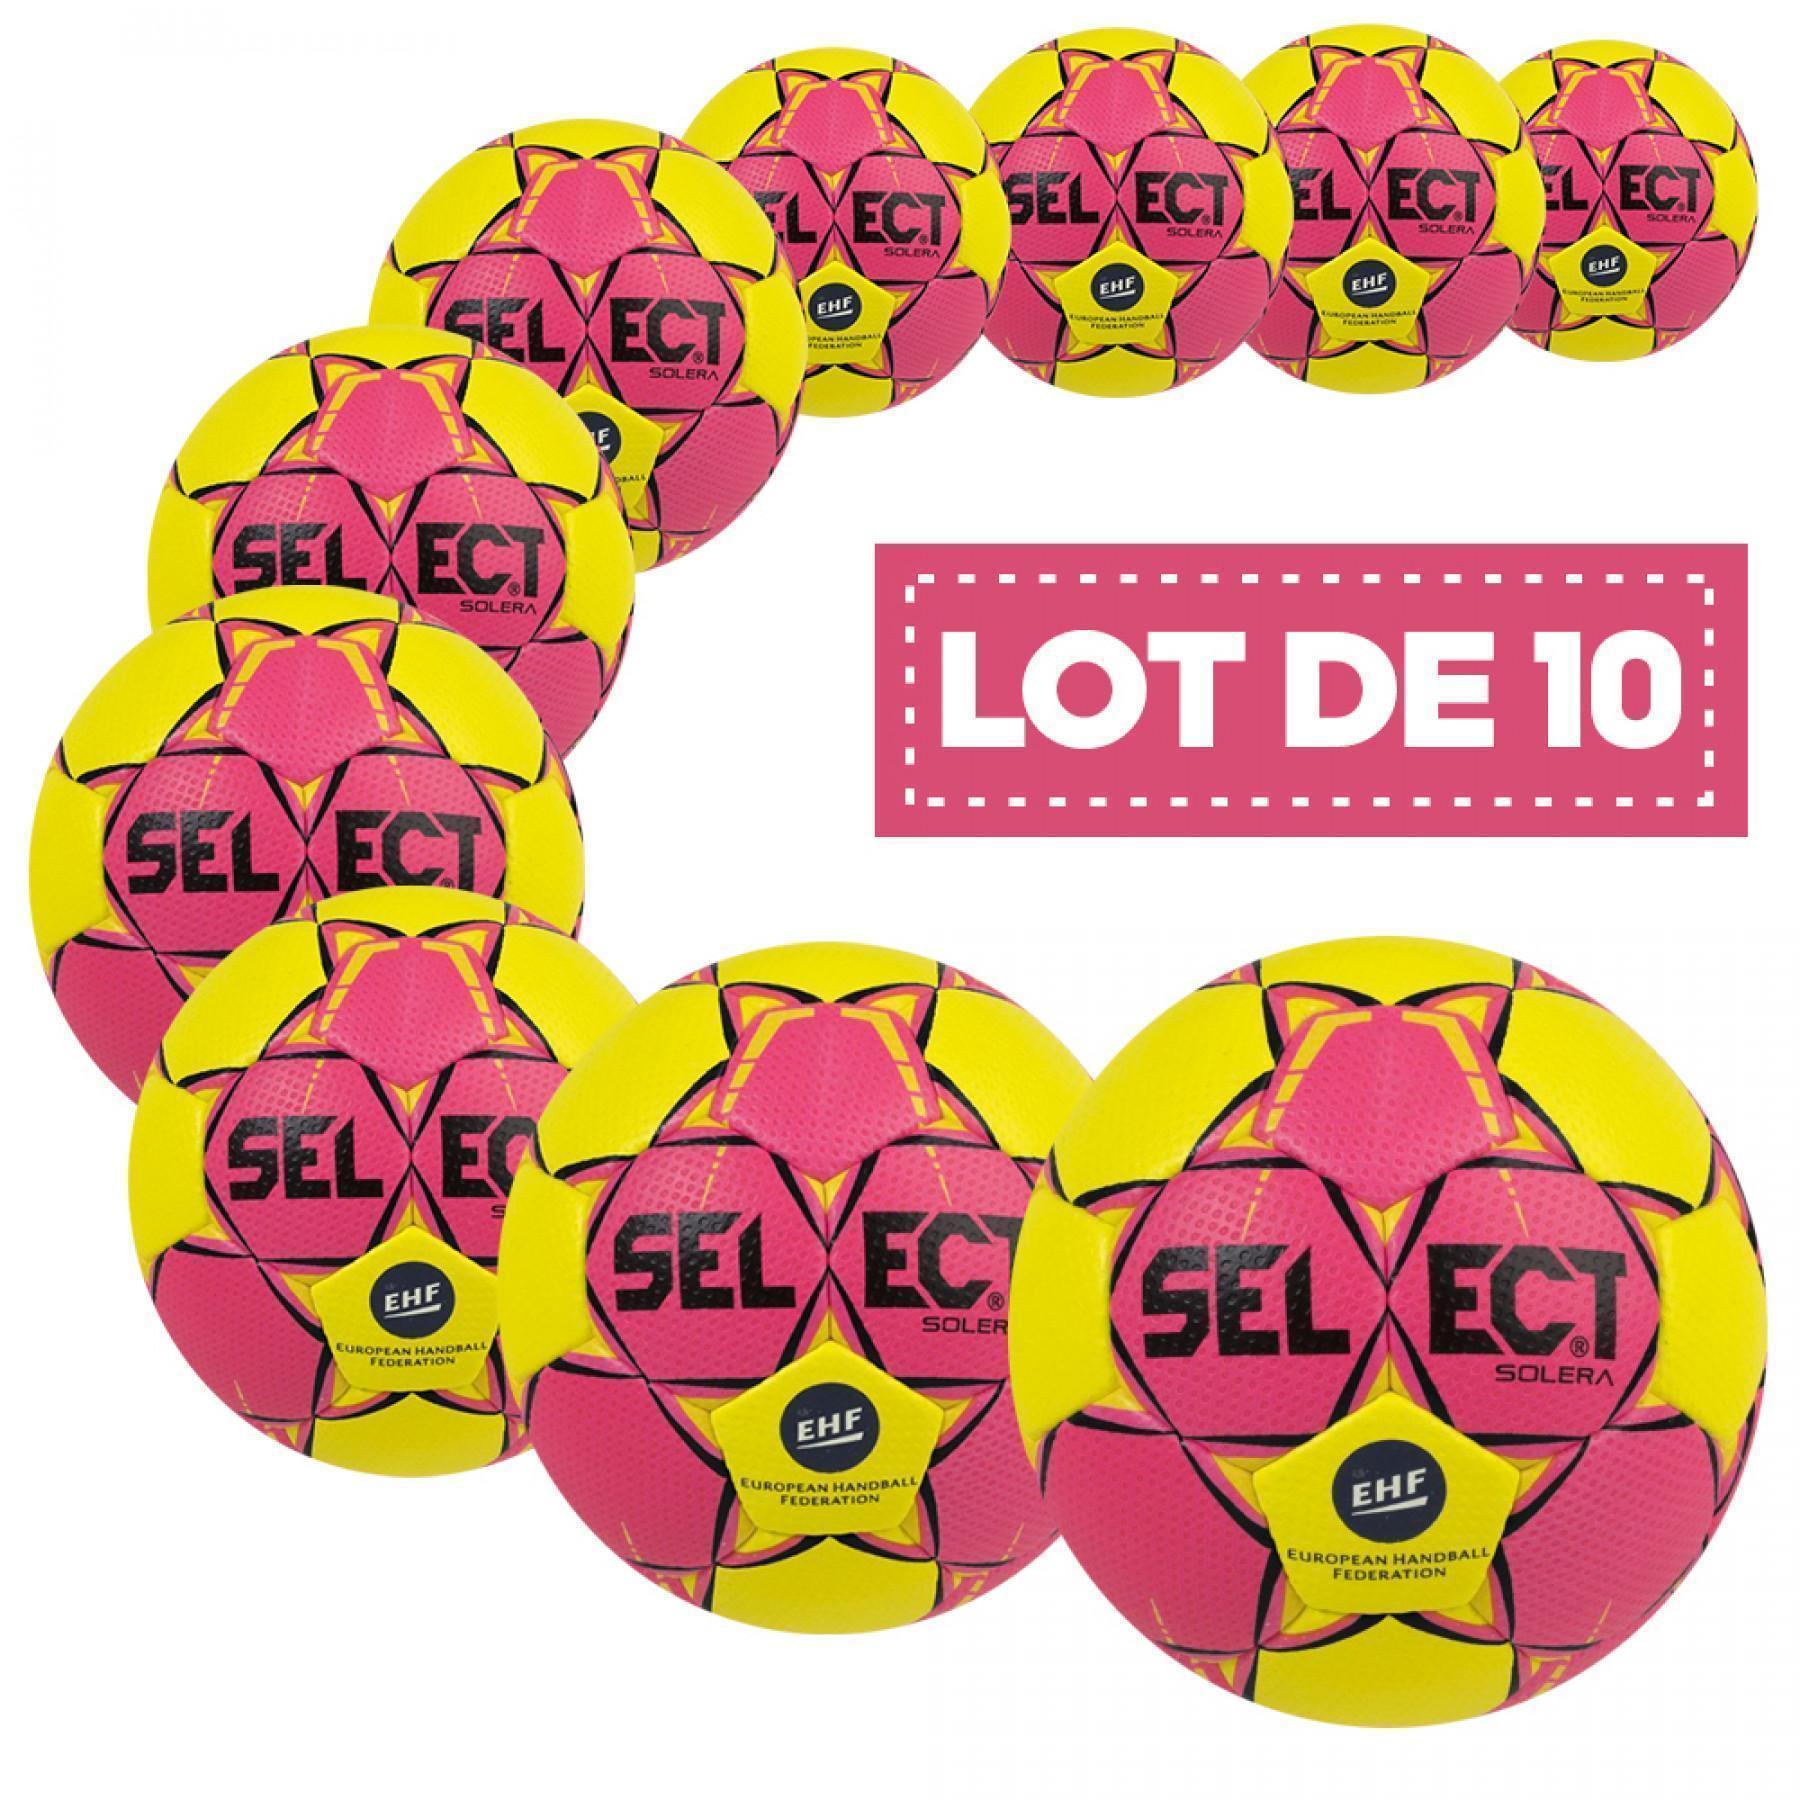 Lot de 10 ballons Select Solera 